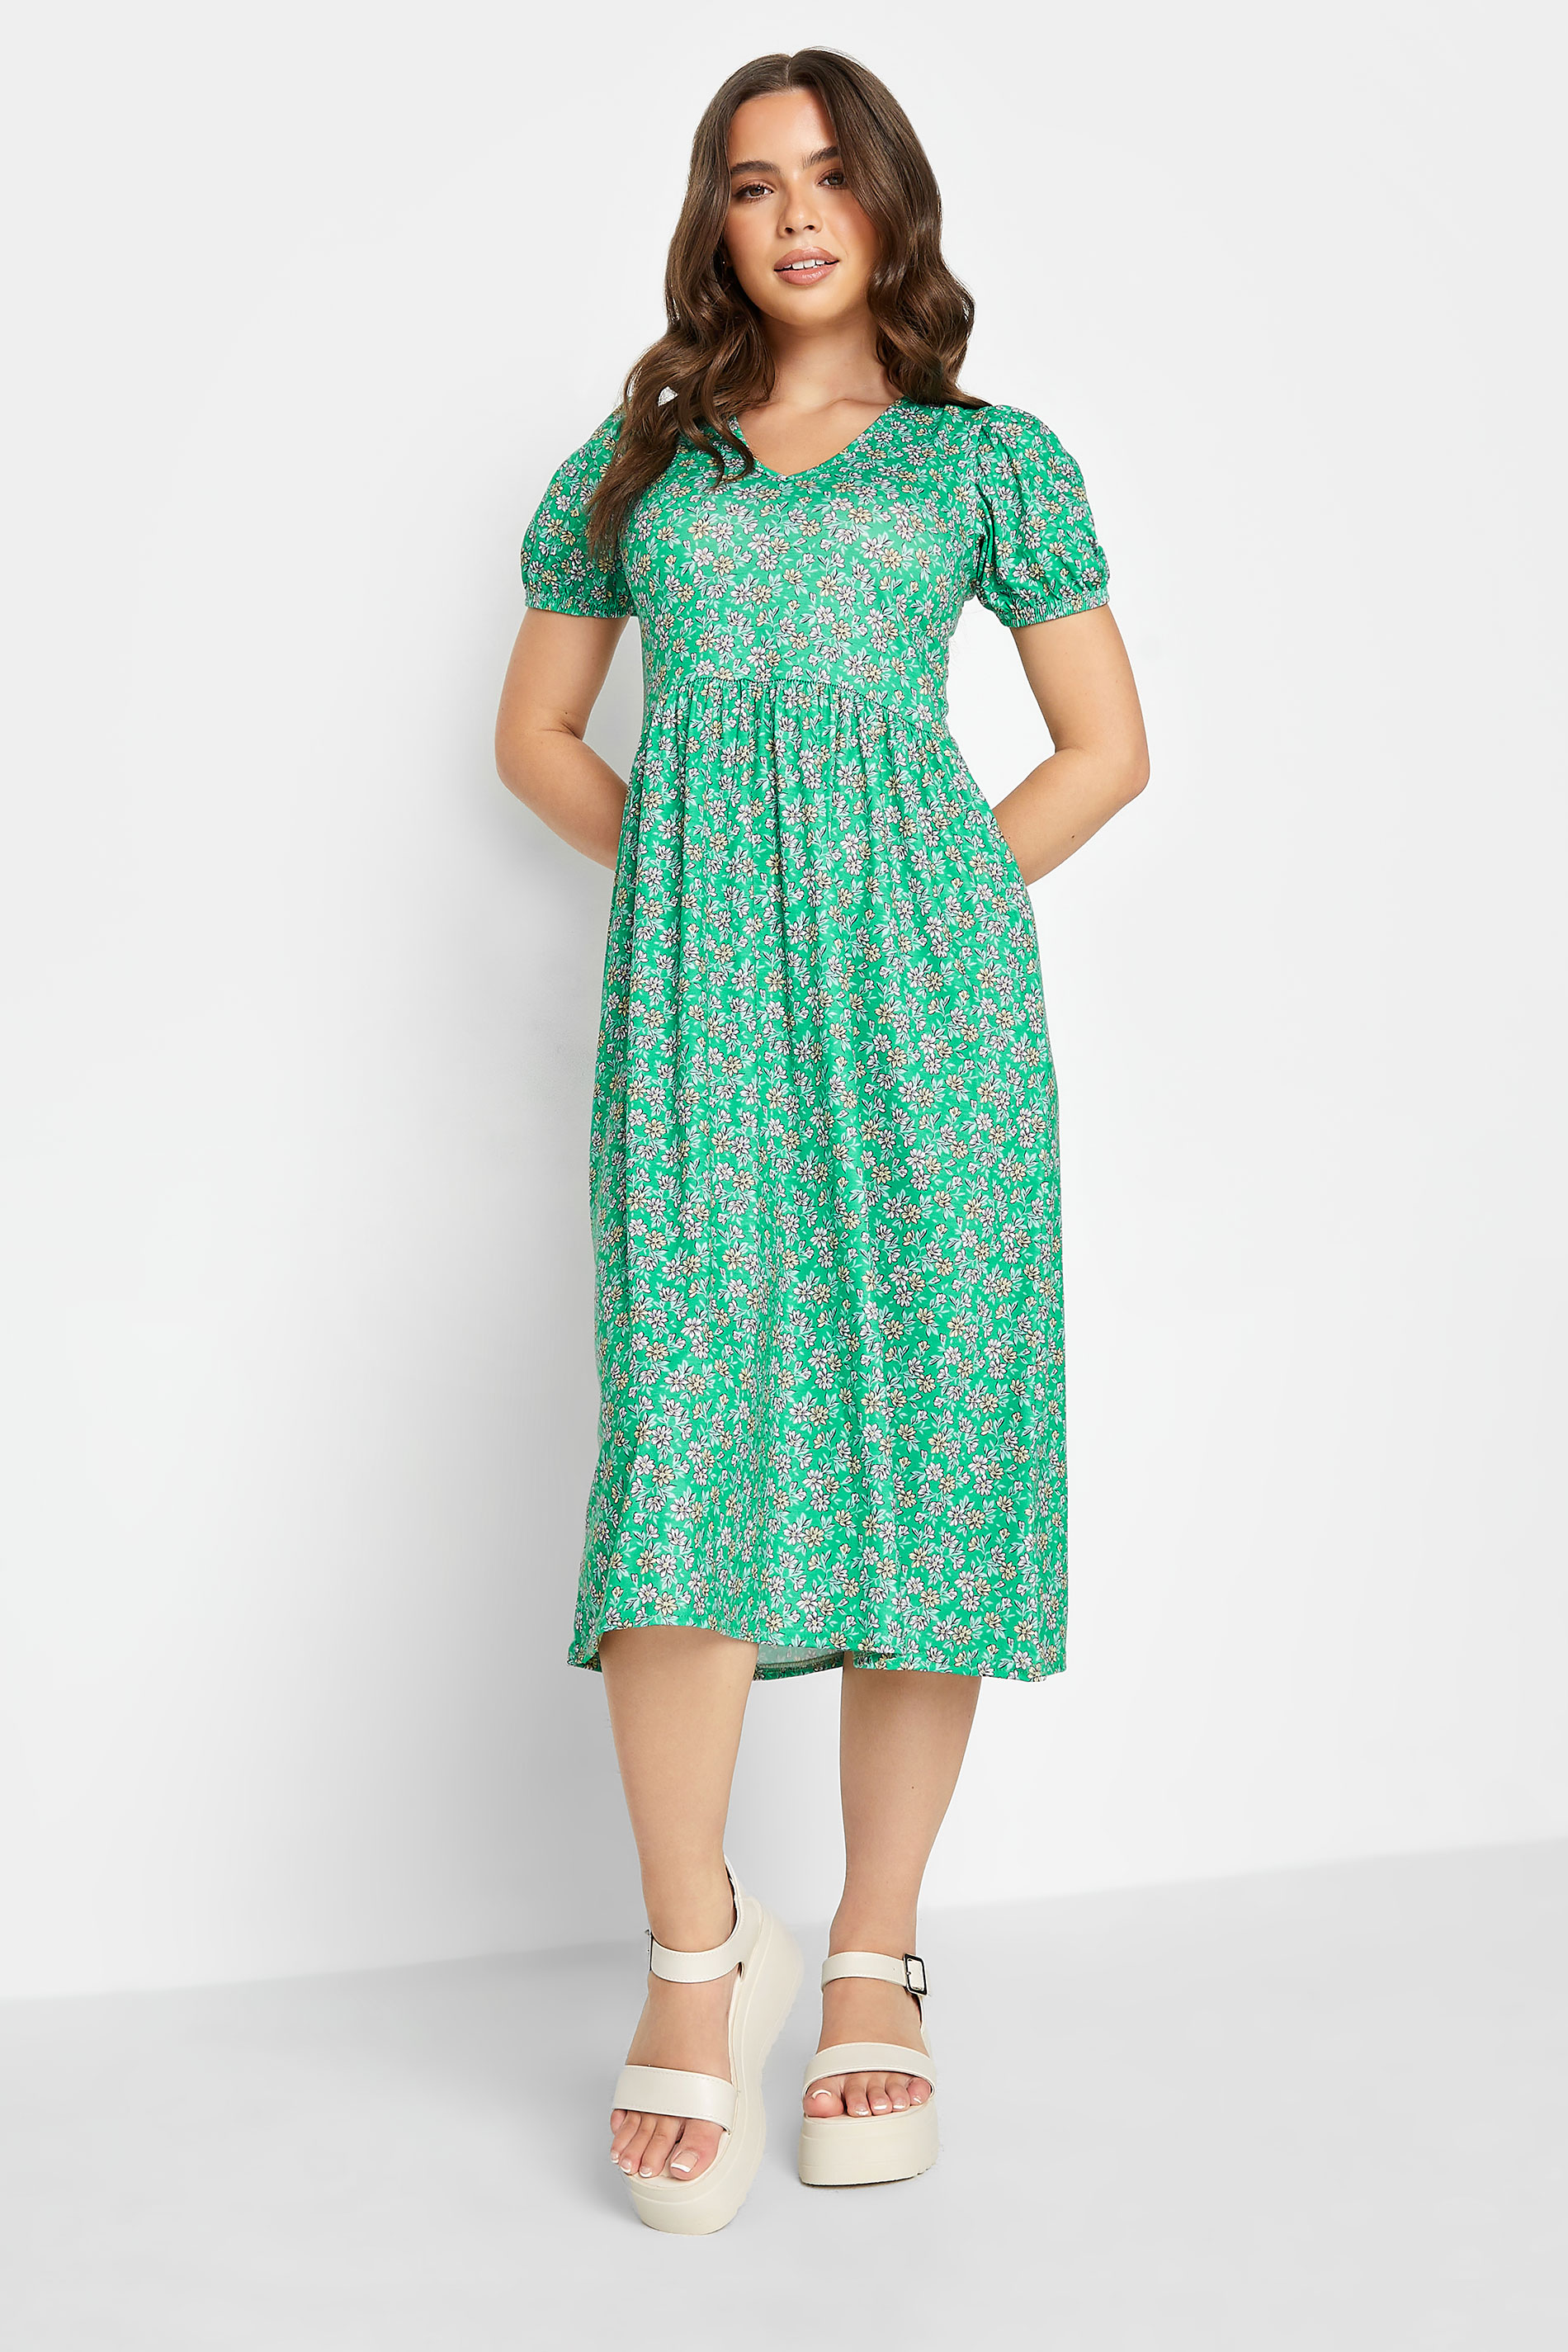 PixieGirl Green Ditsy Floral Print Dress | PixieGirl  1